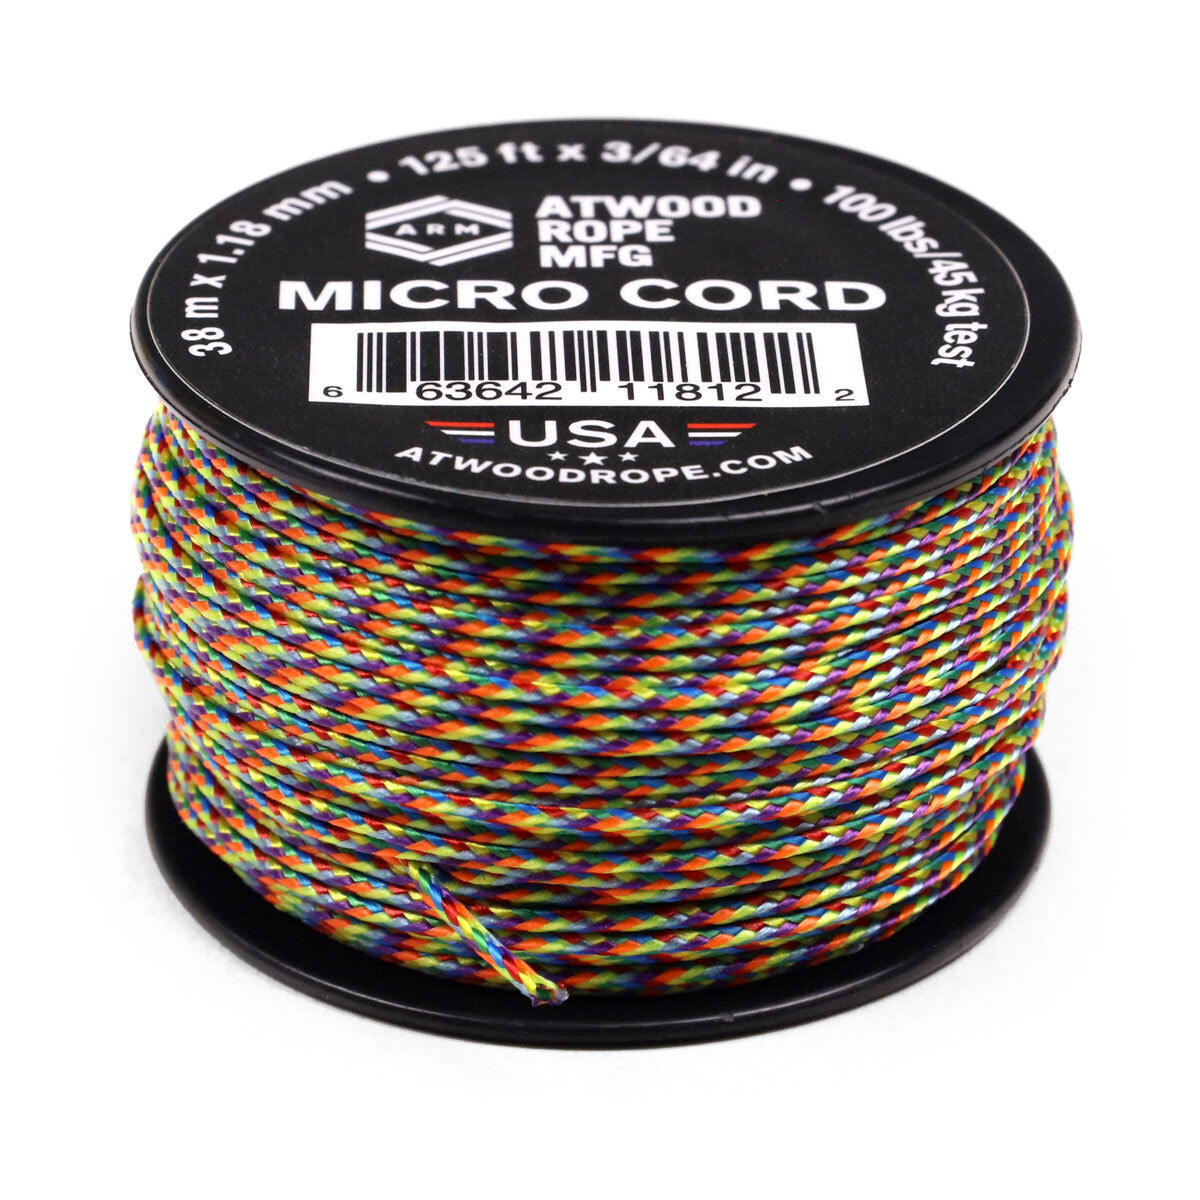 Atwood Rope MFG Micro Cord 125ft - Mökkimies.com